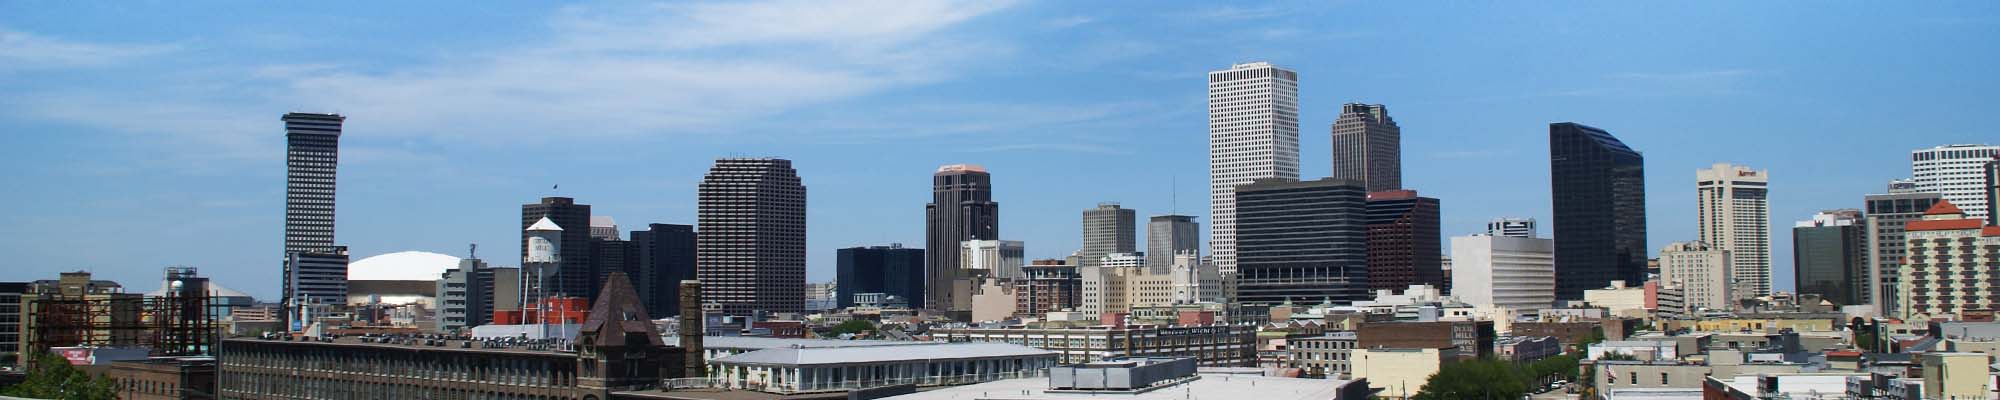 New Orleans city skyline